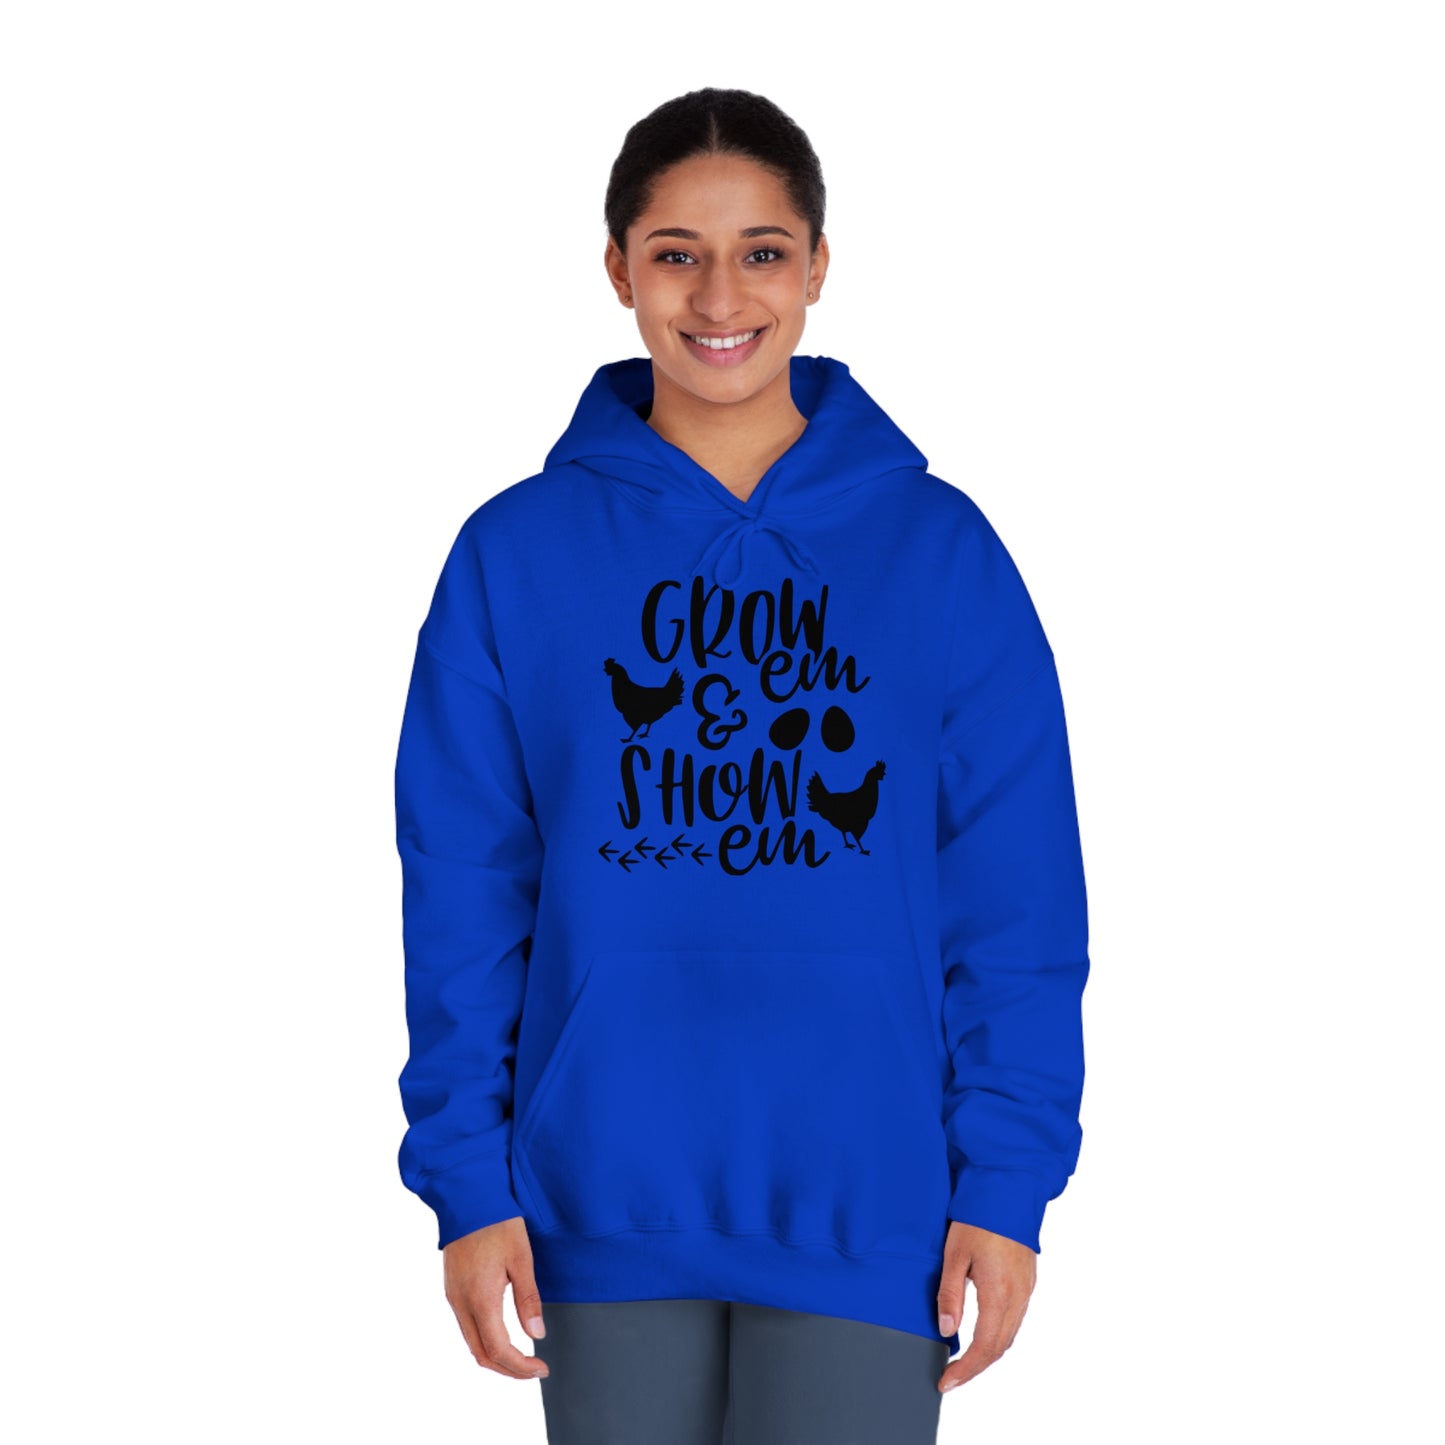 Unisex DryBlend® Hooded Sweatshirt - Grow Show Chicken